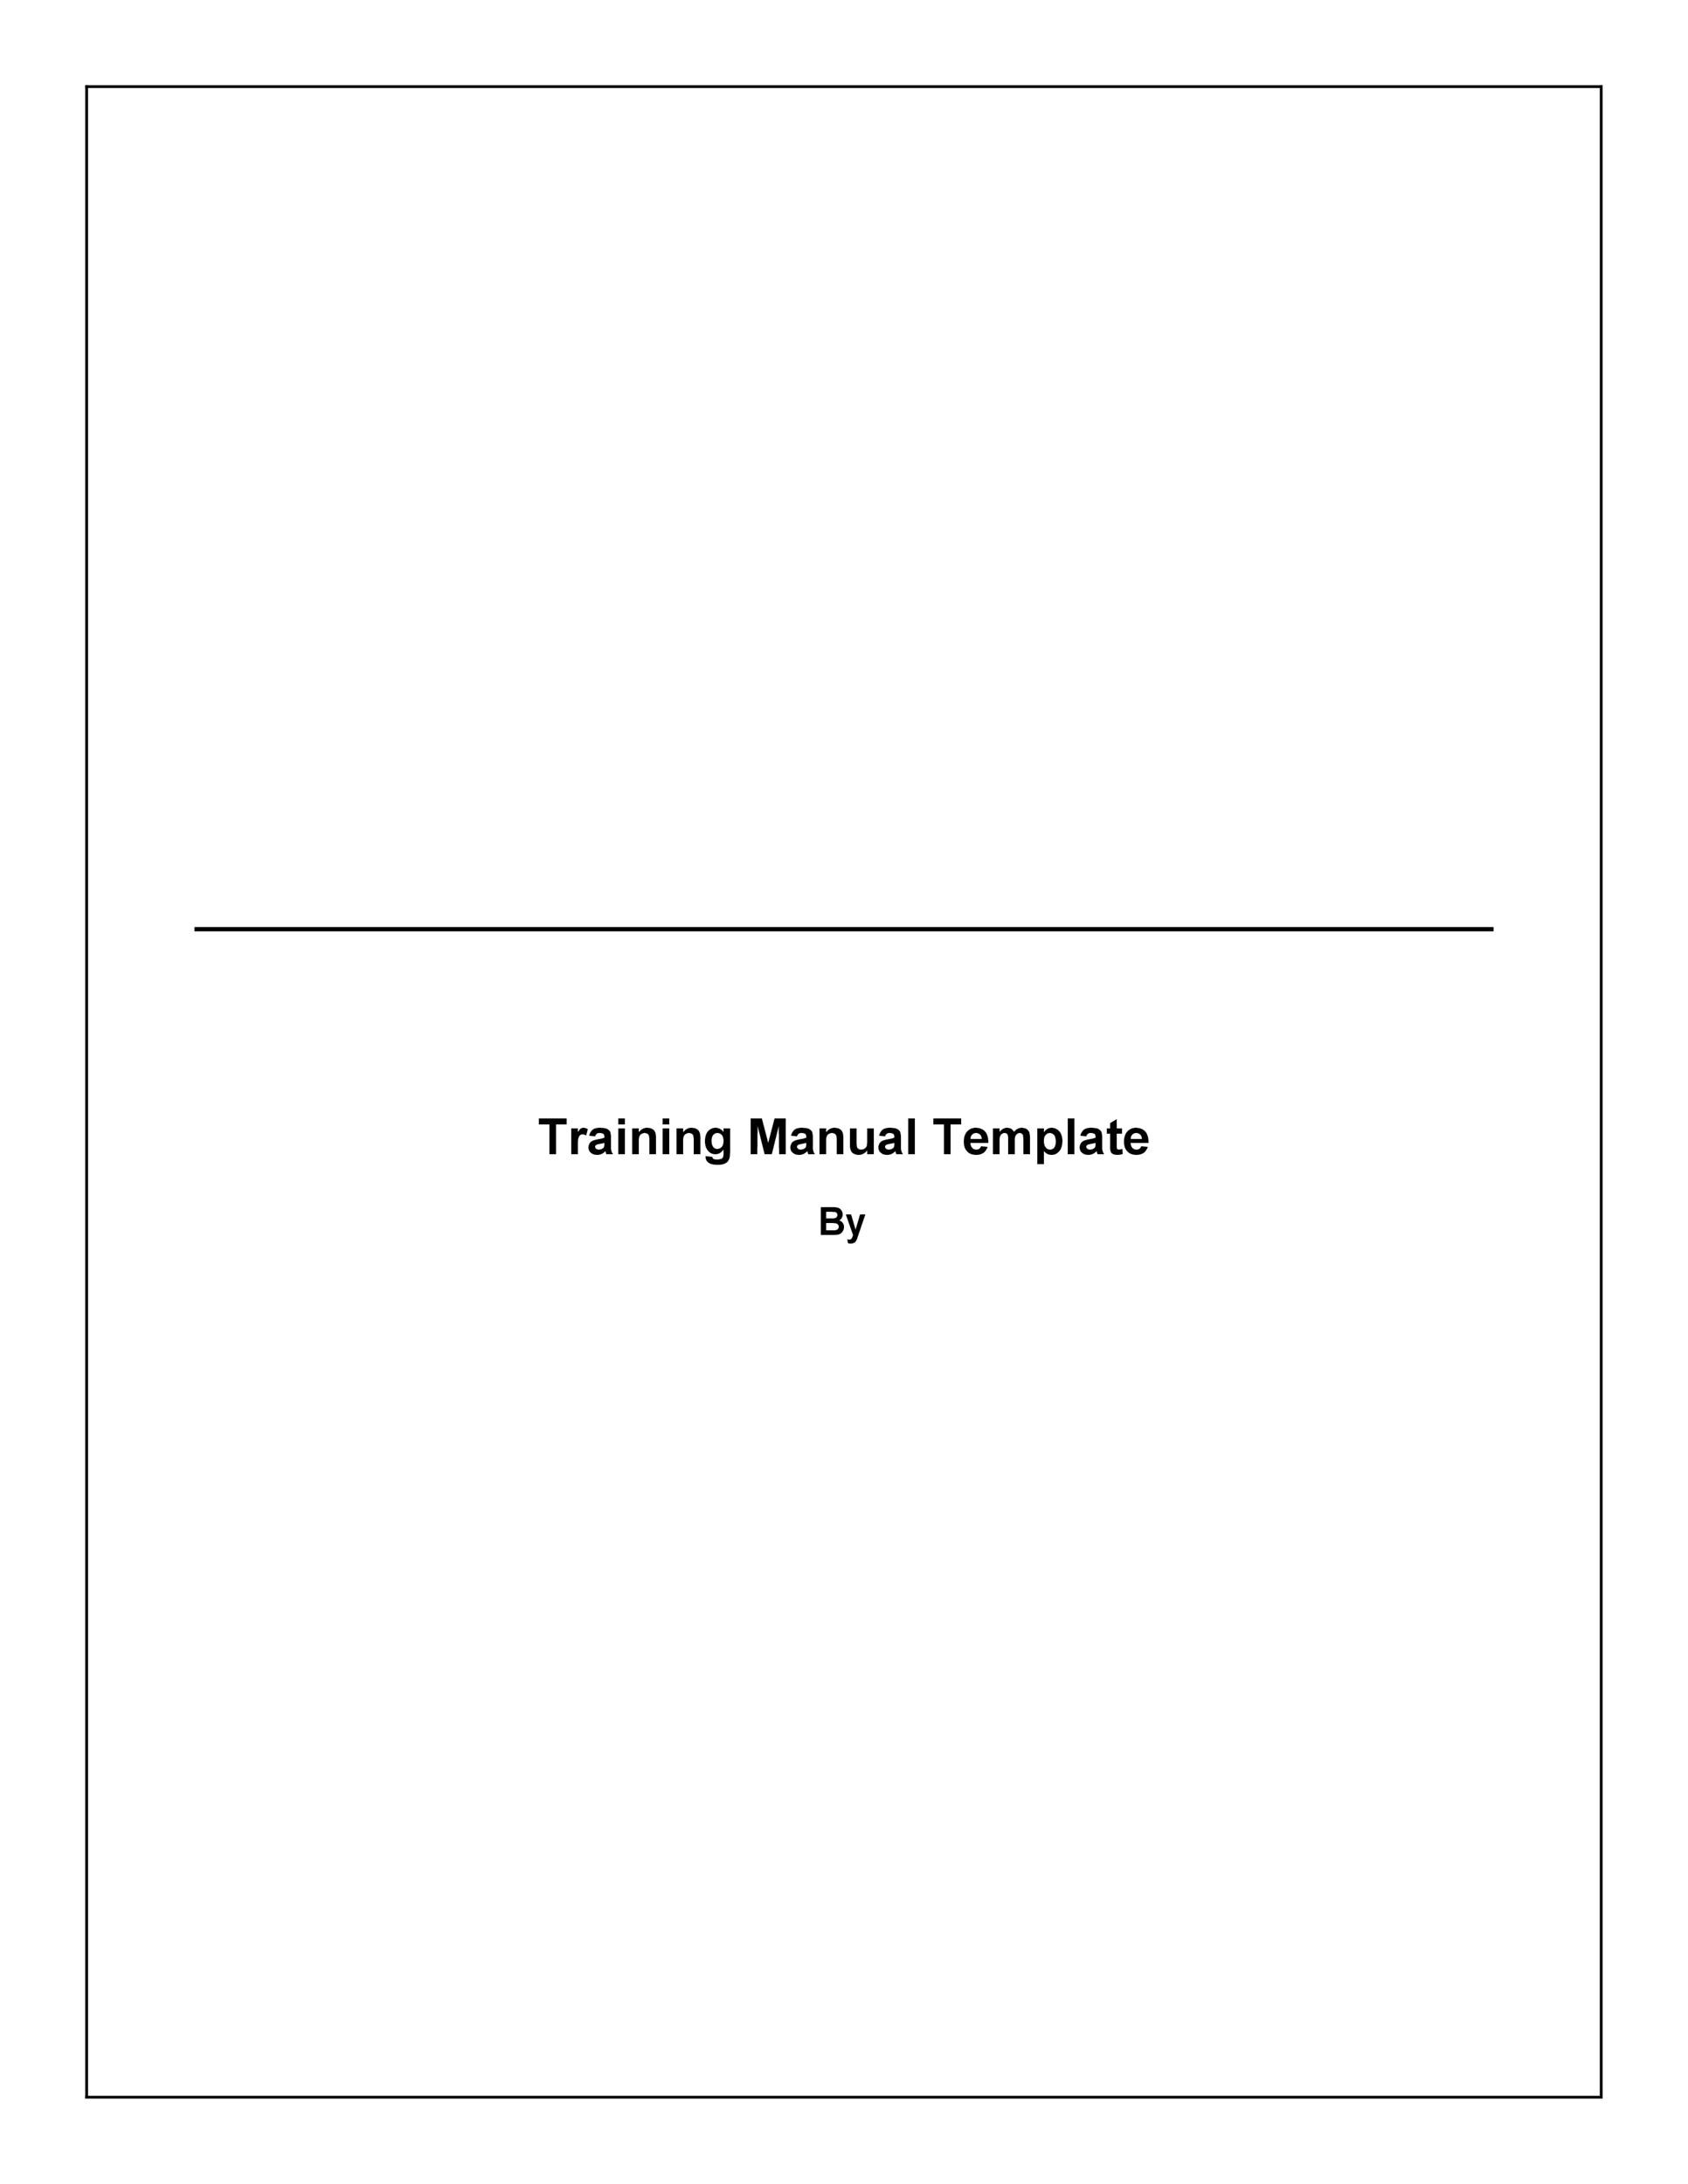 Free training manual template 19